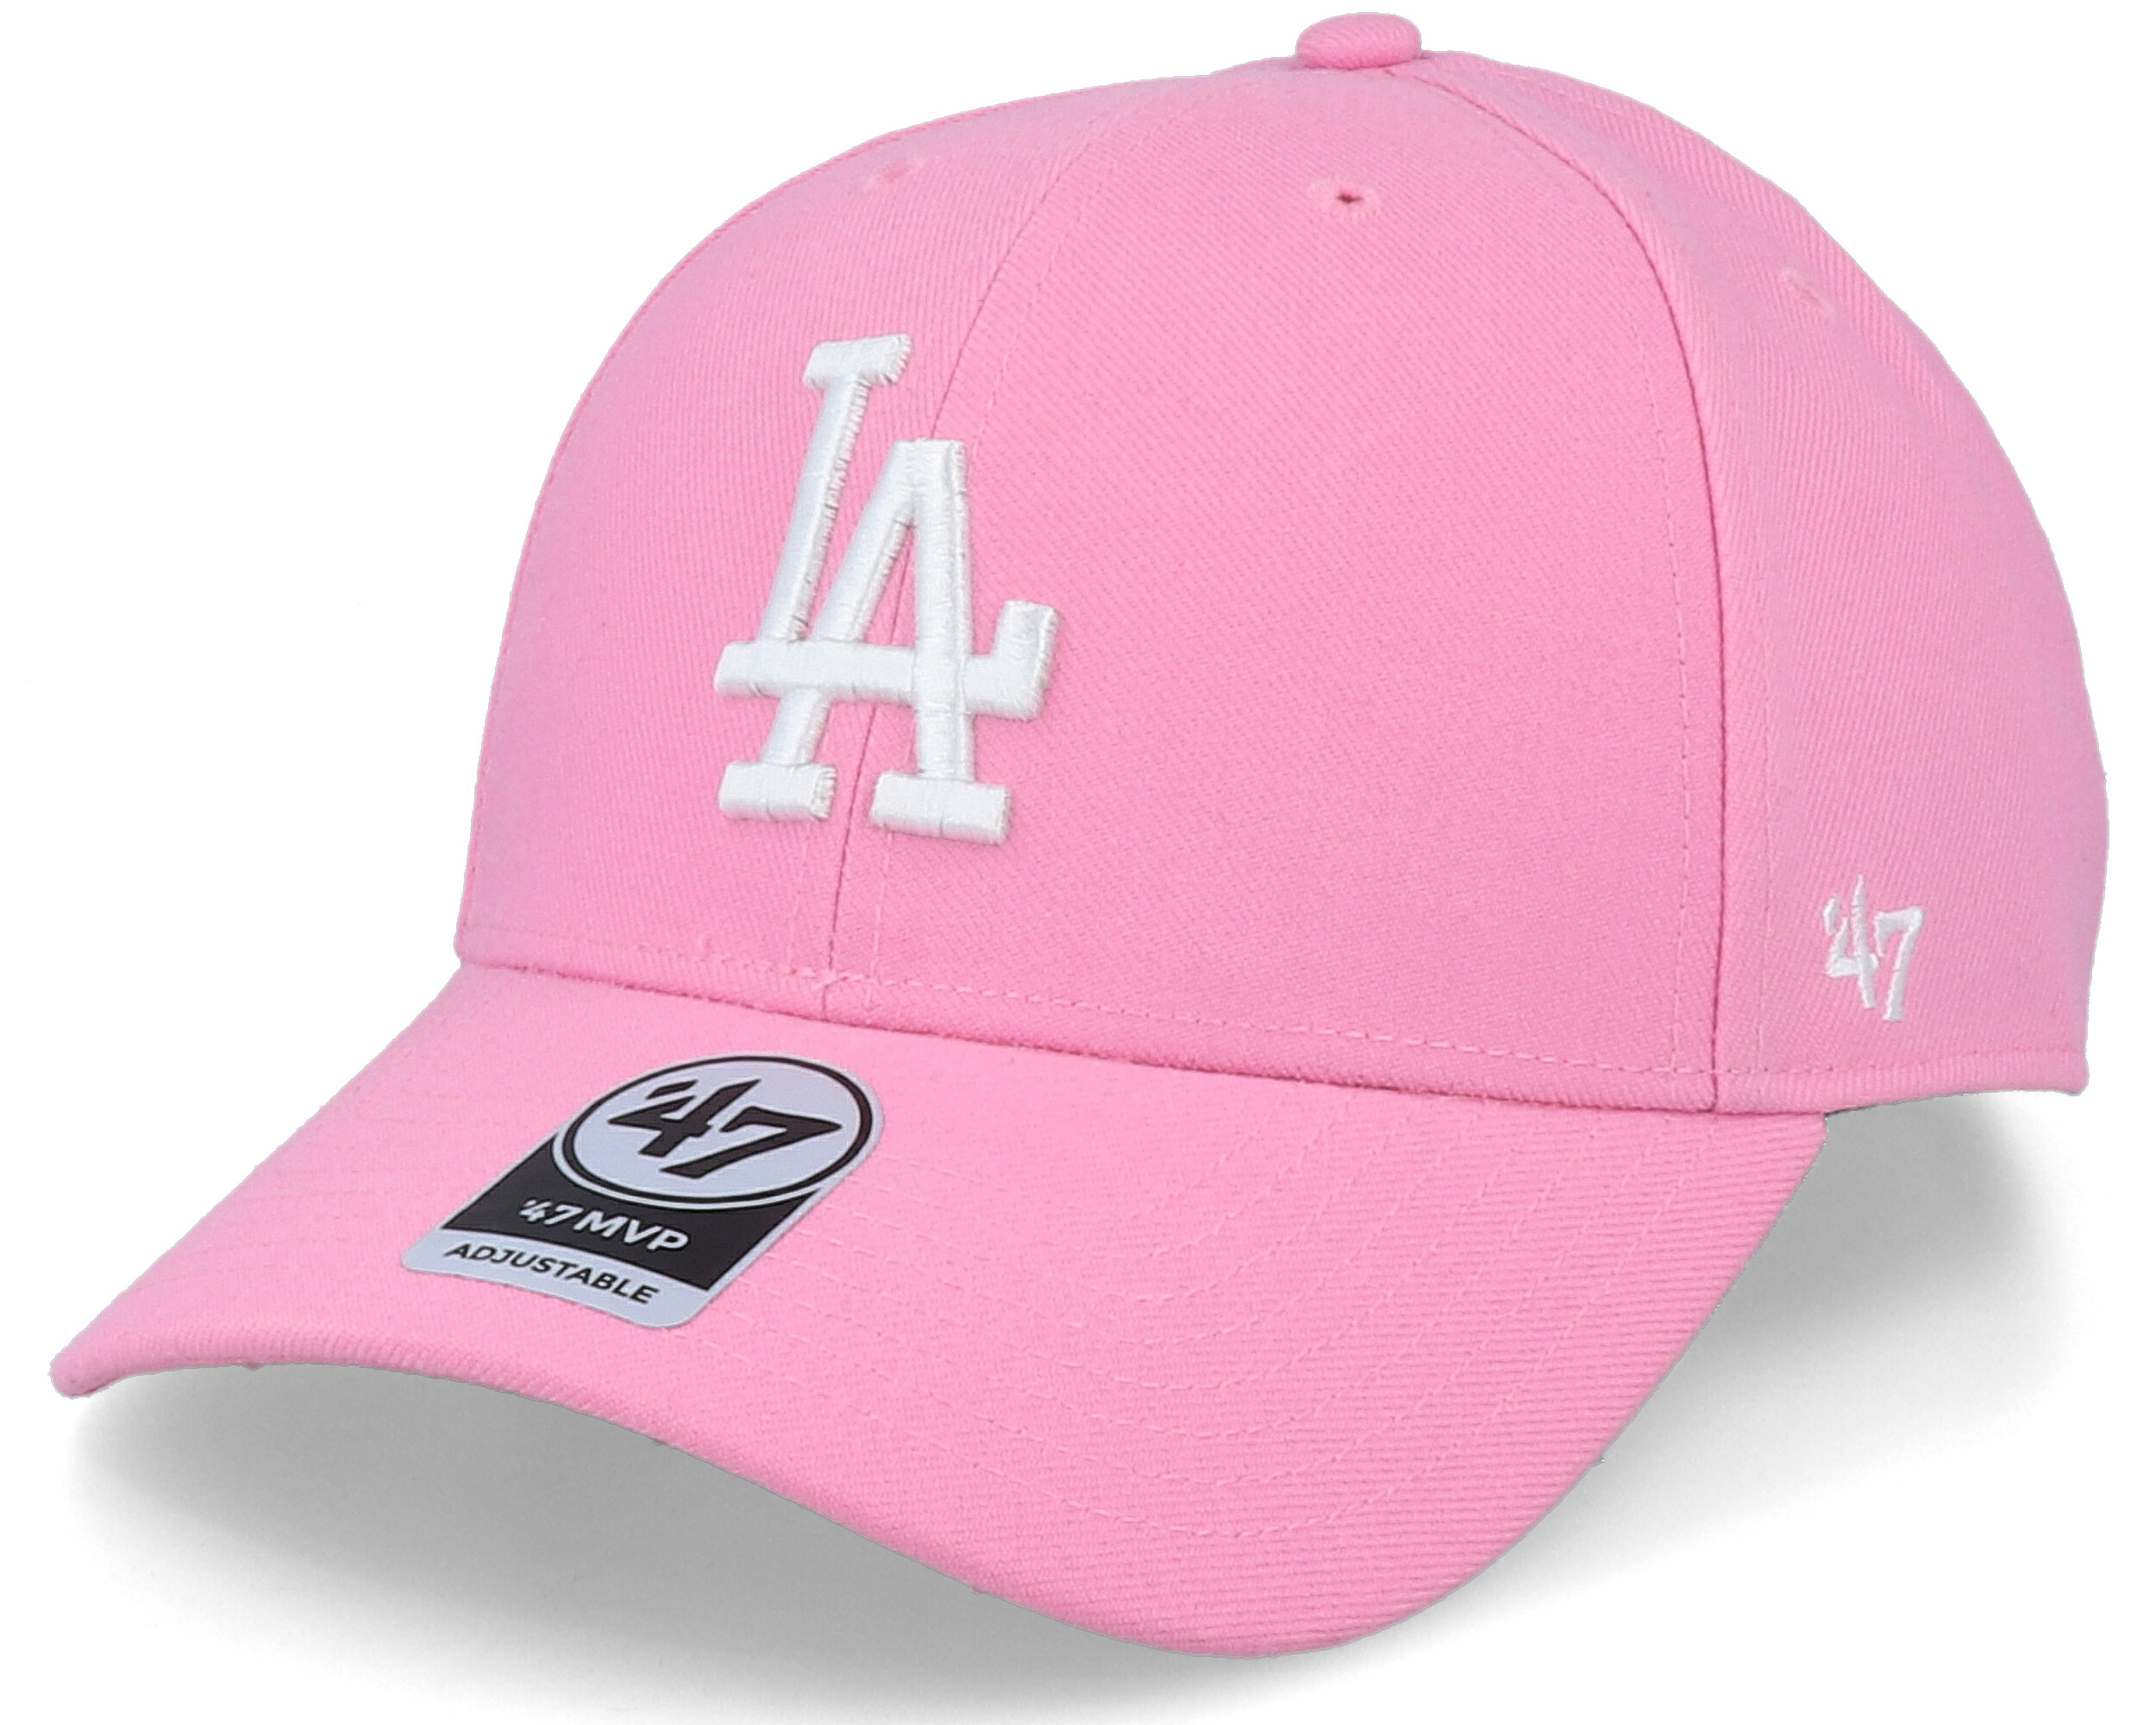 Los Angeles Dodgers Mvp Rose Pink/White Adjustable - 47 Brand